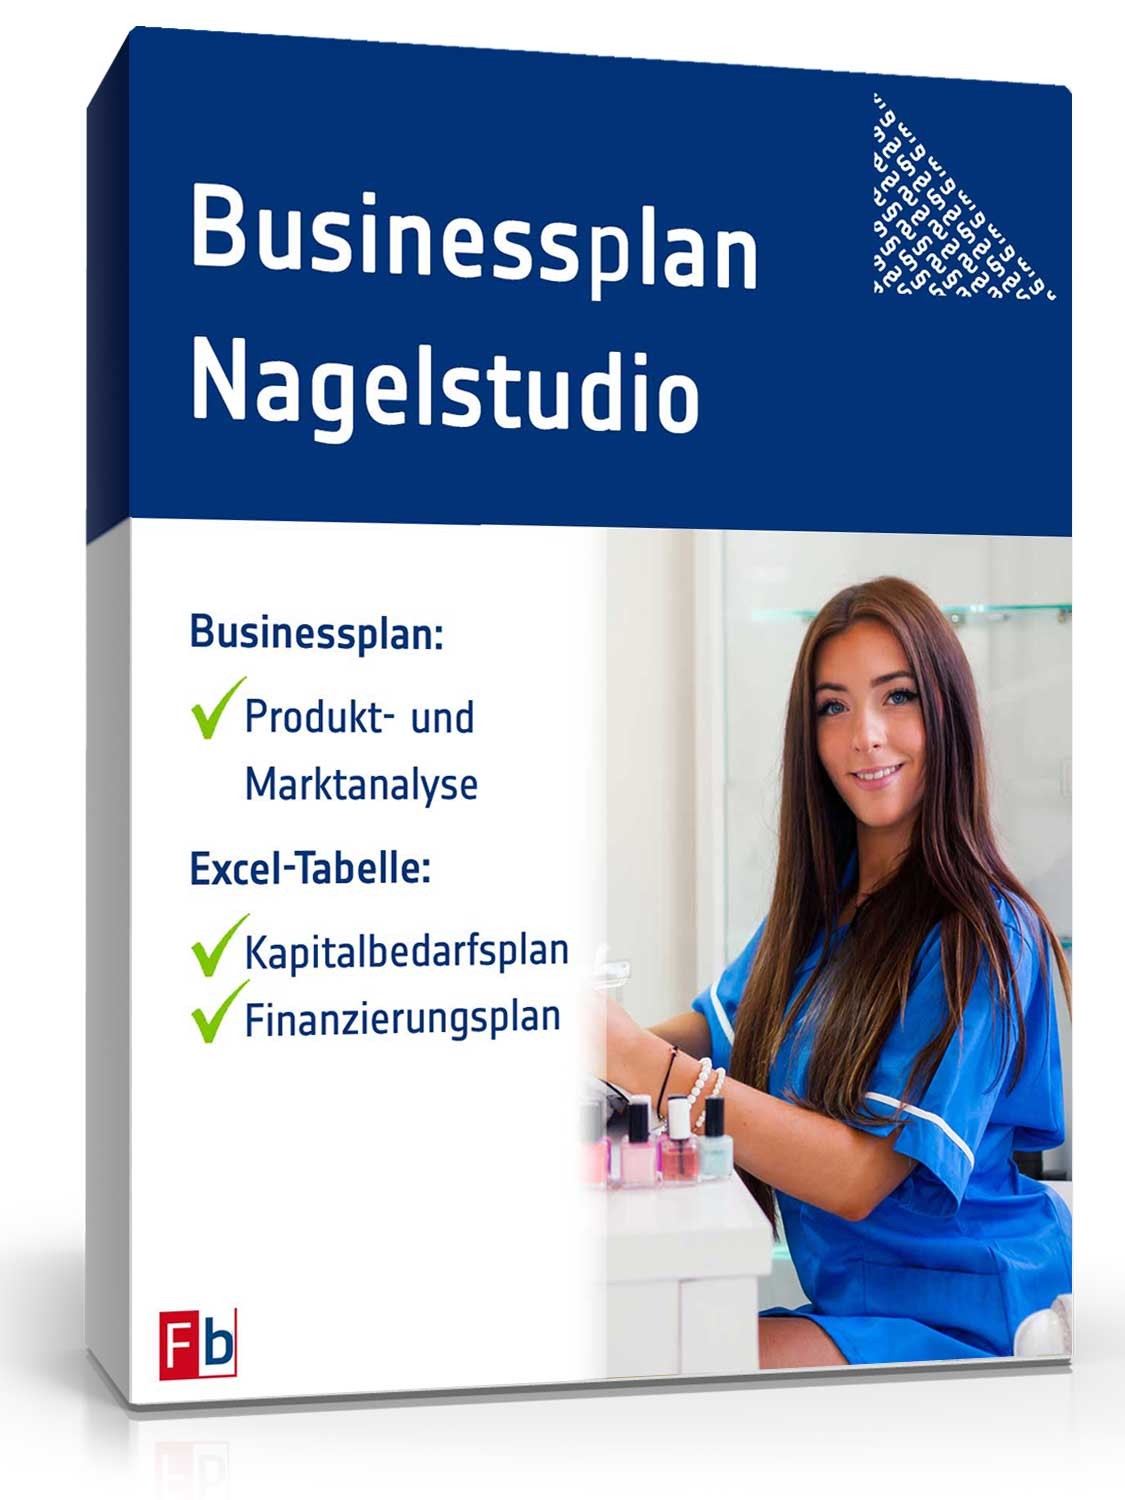 Hauptbild des Produkts: Businessplan Nagelstudio